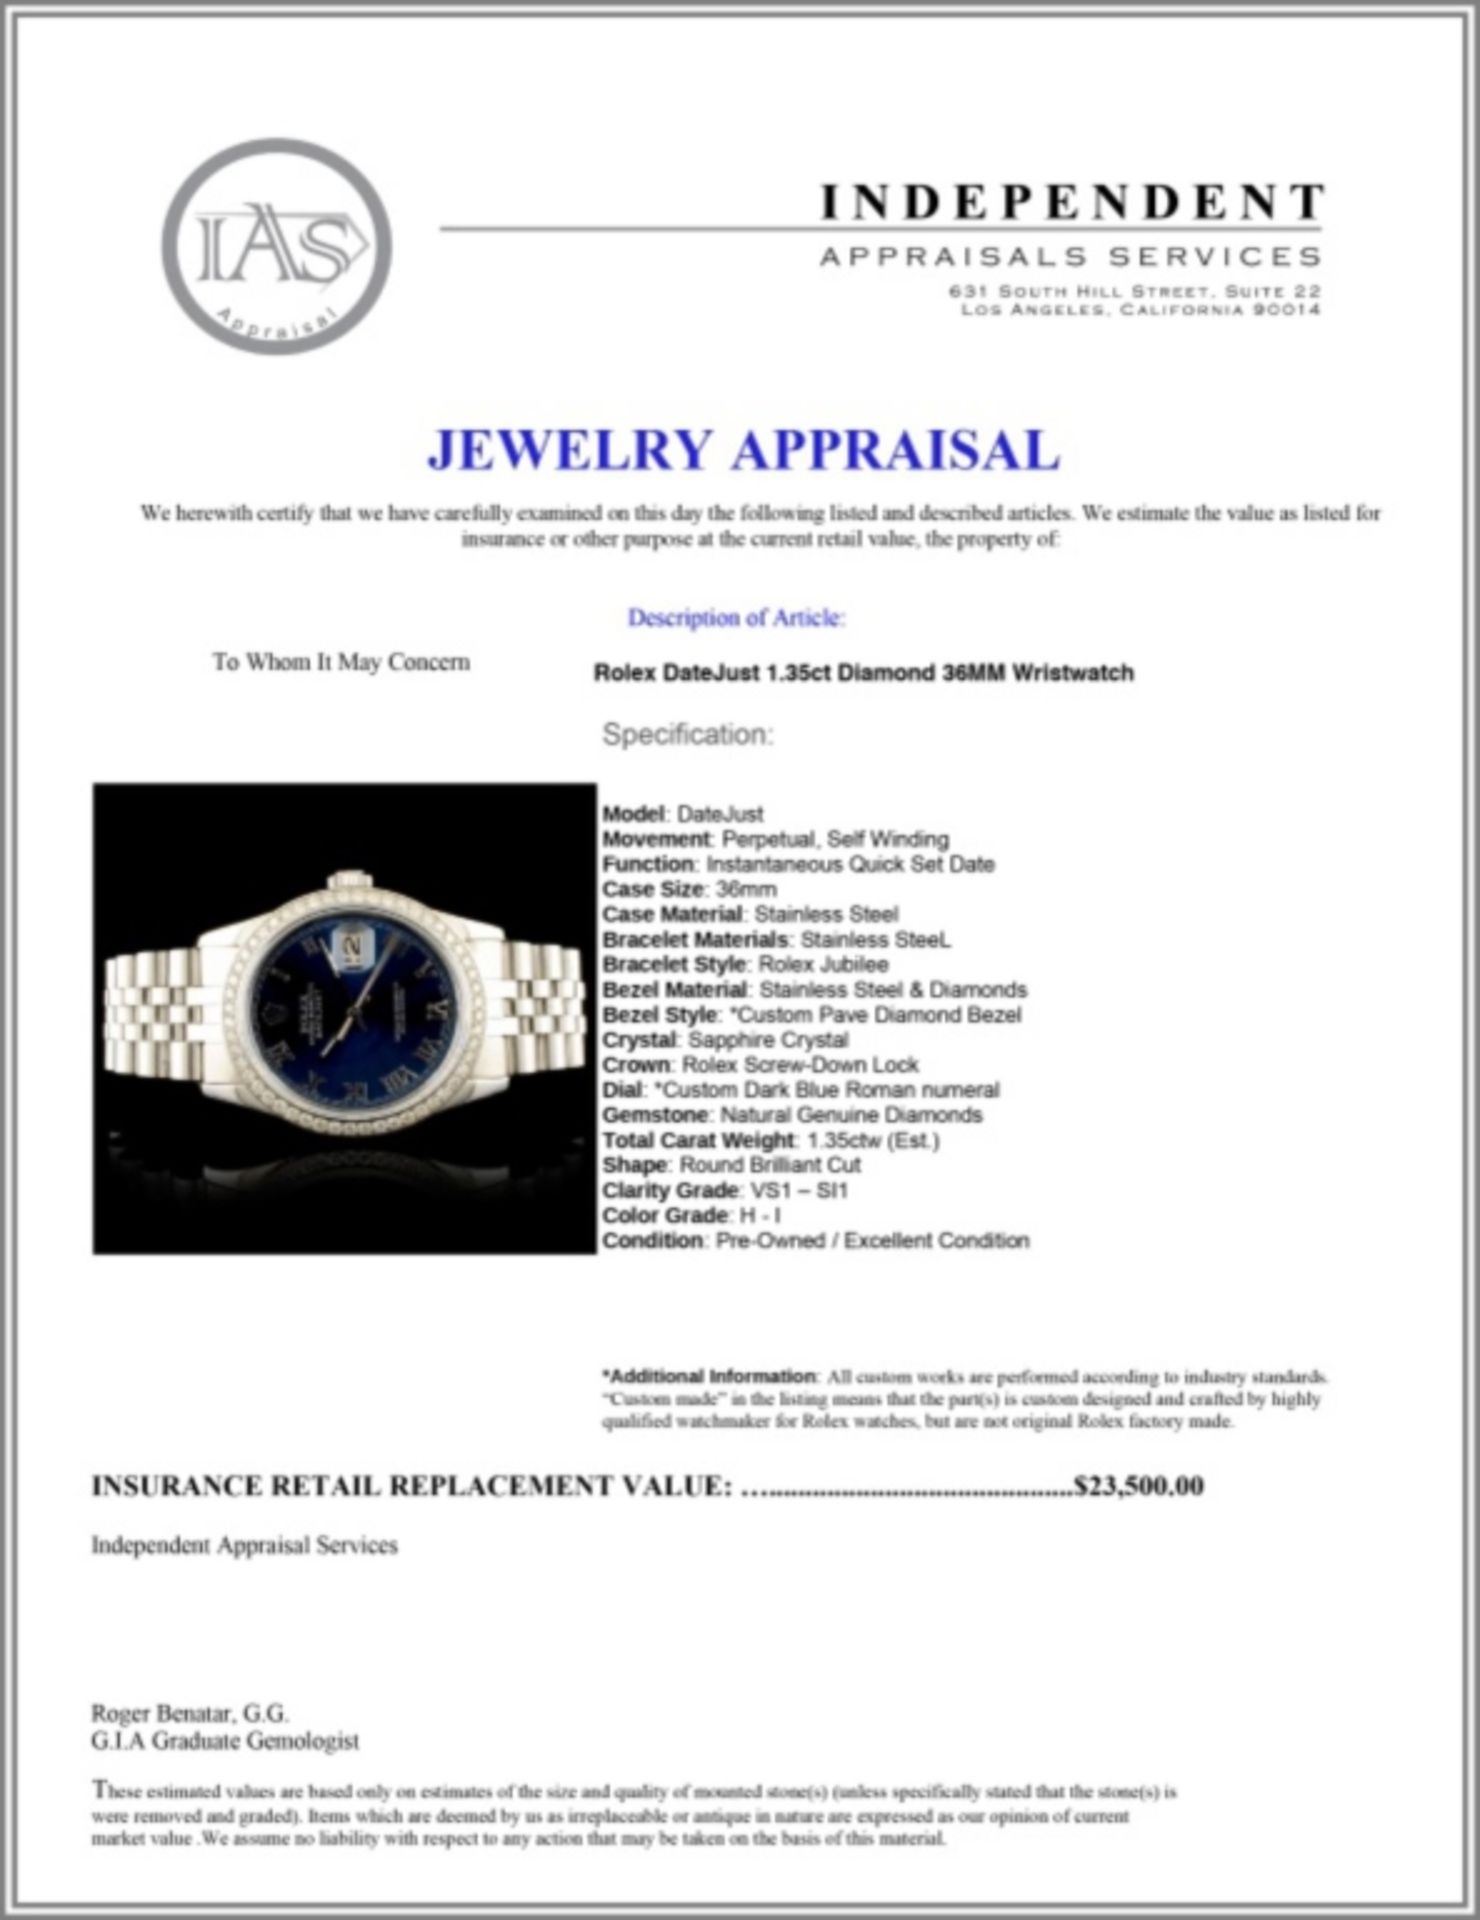 Rolex DateJust 1.35ct Diamond 36MM Wristwatch - Image 4 of 4